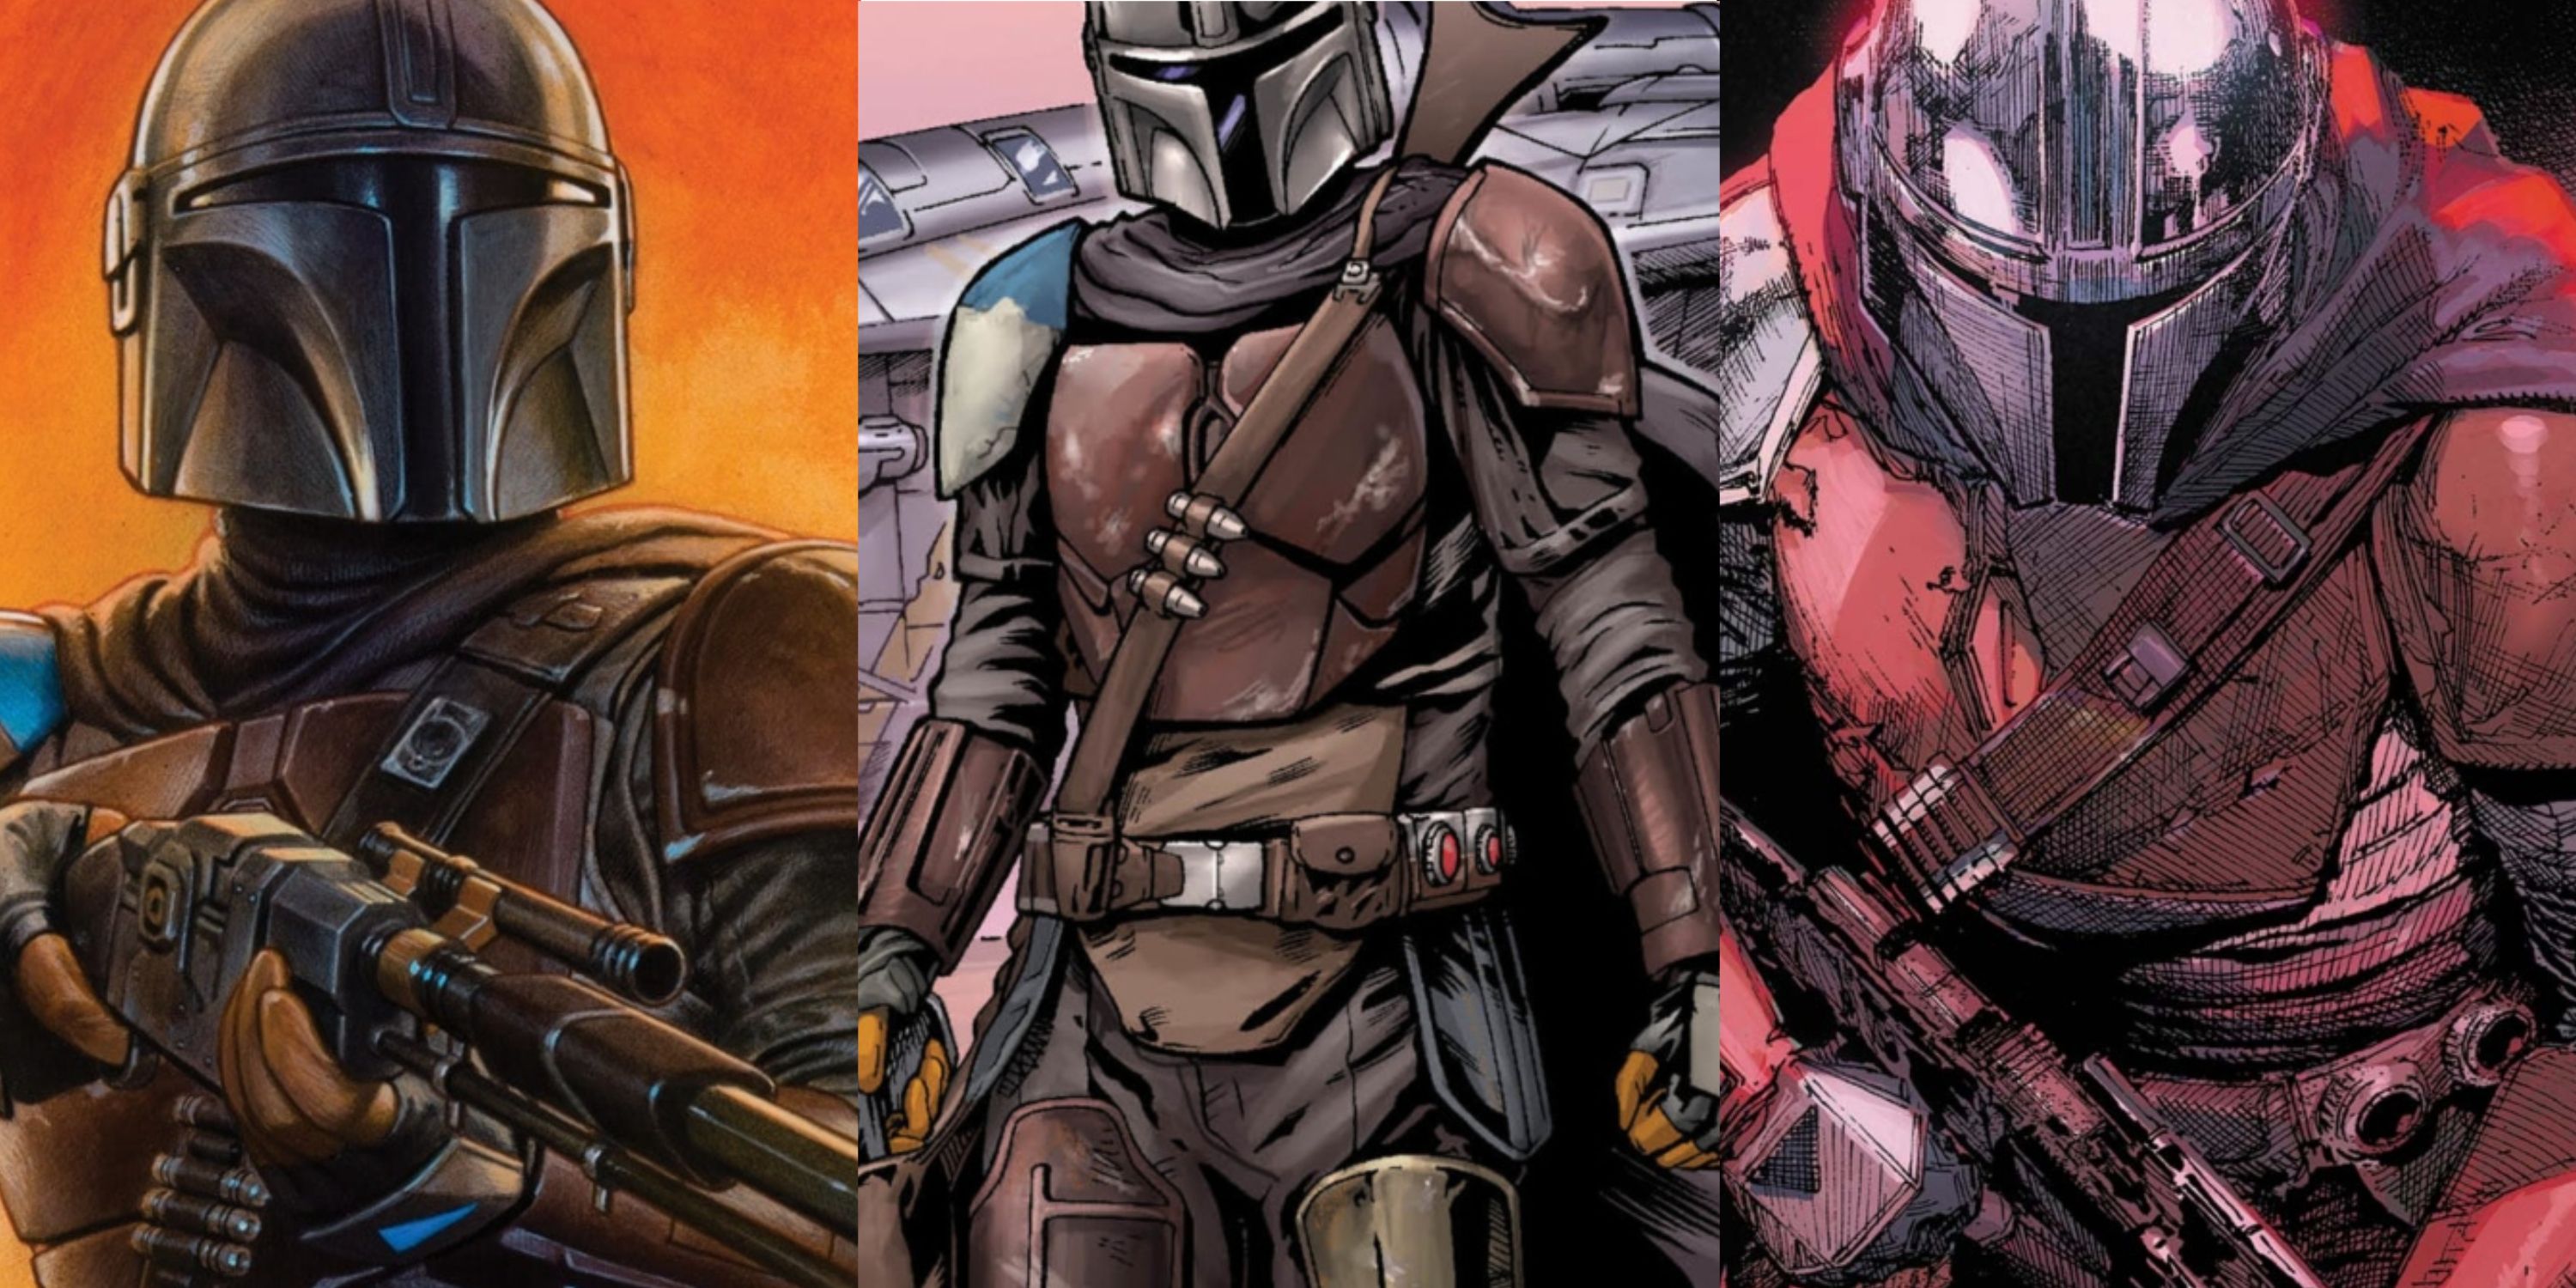 Split image featuring the Mandalorian from Marvel Comics